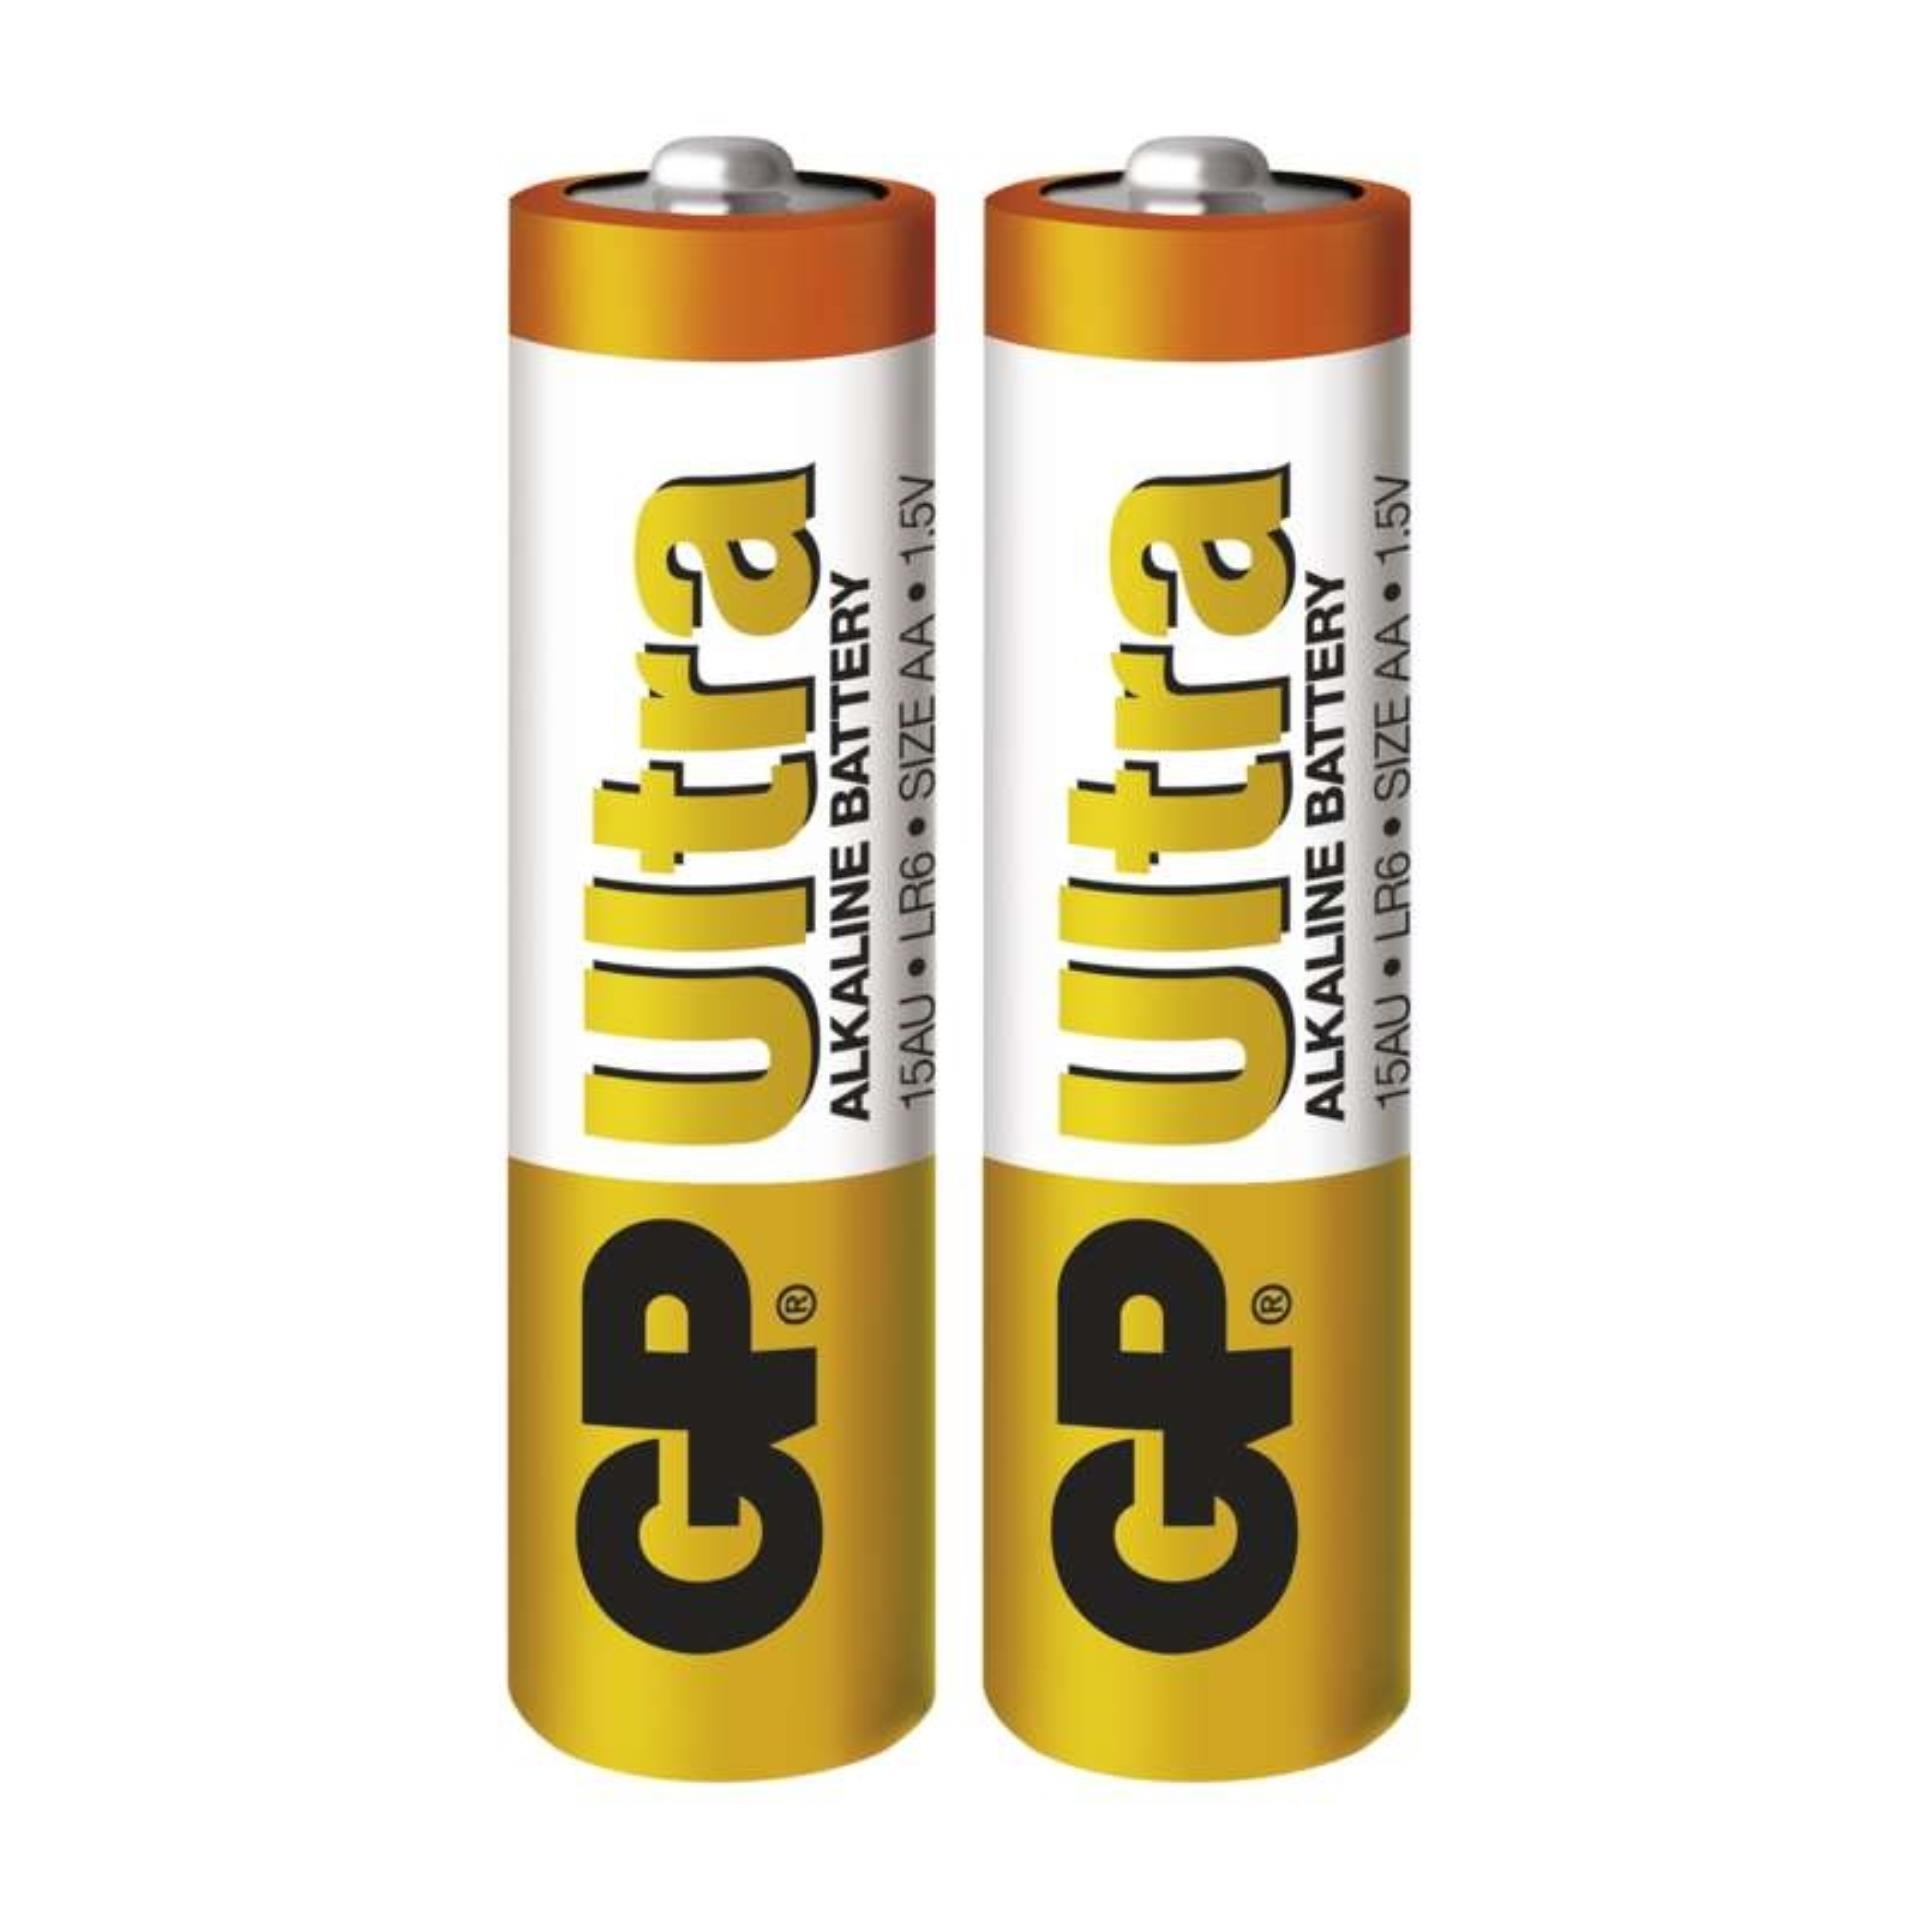 Baterie GP Ultra Alkaline 1,5V, R6, typ AA, 2 ks